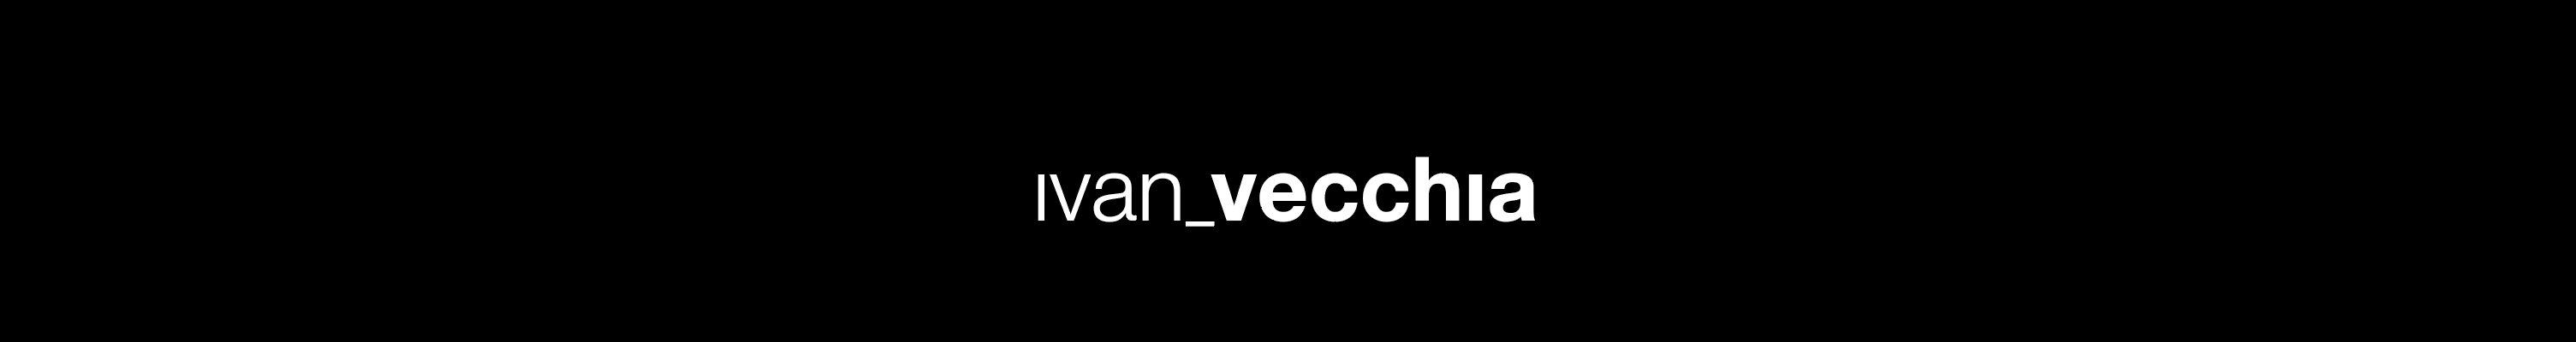 Ivan Vecchia's profile banner